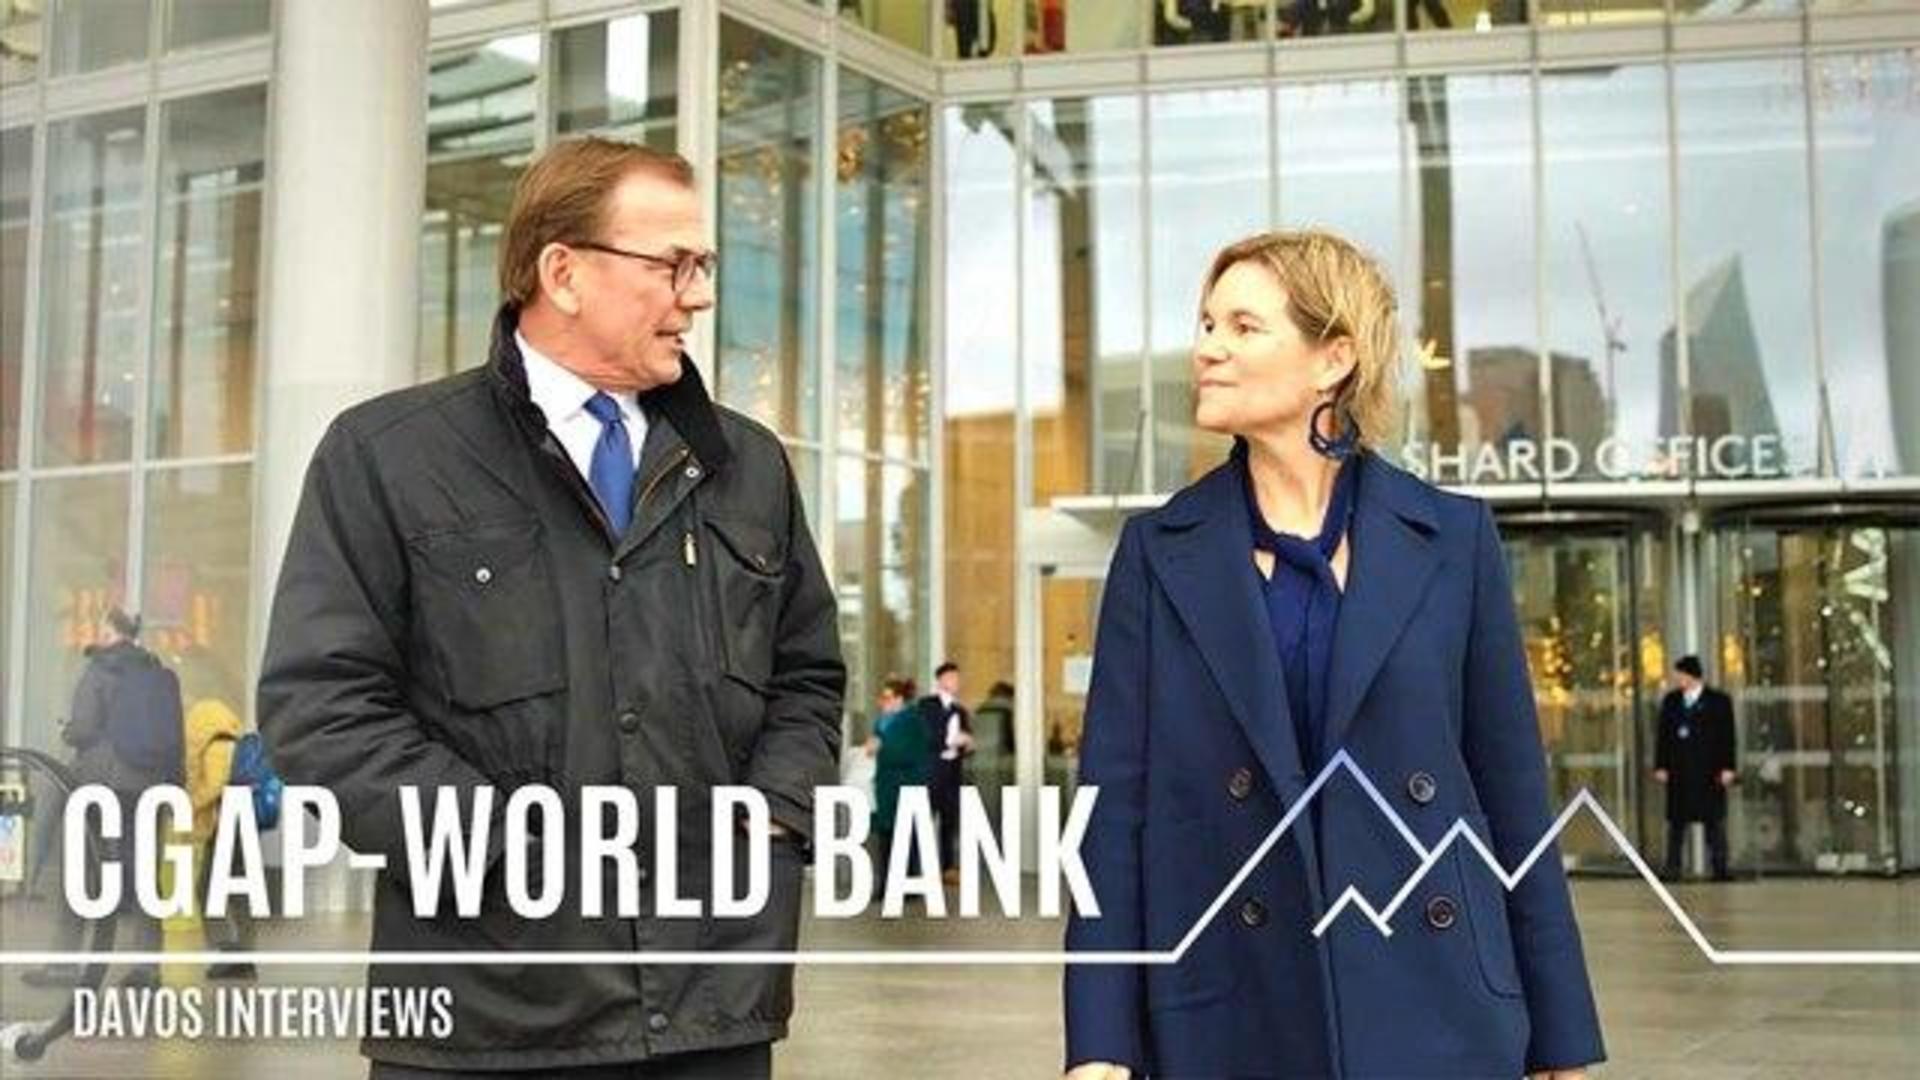 Norway Savings Bank partners with U.S. National Champion Mogul